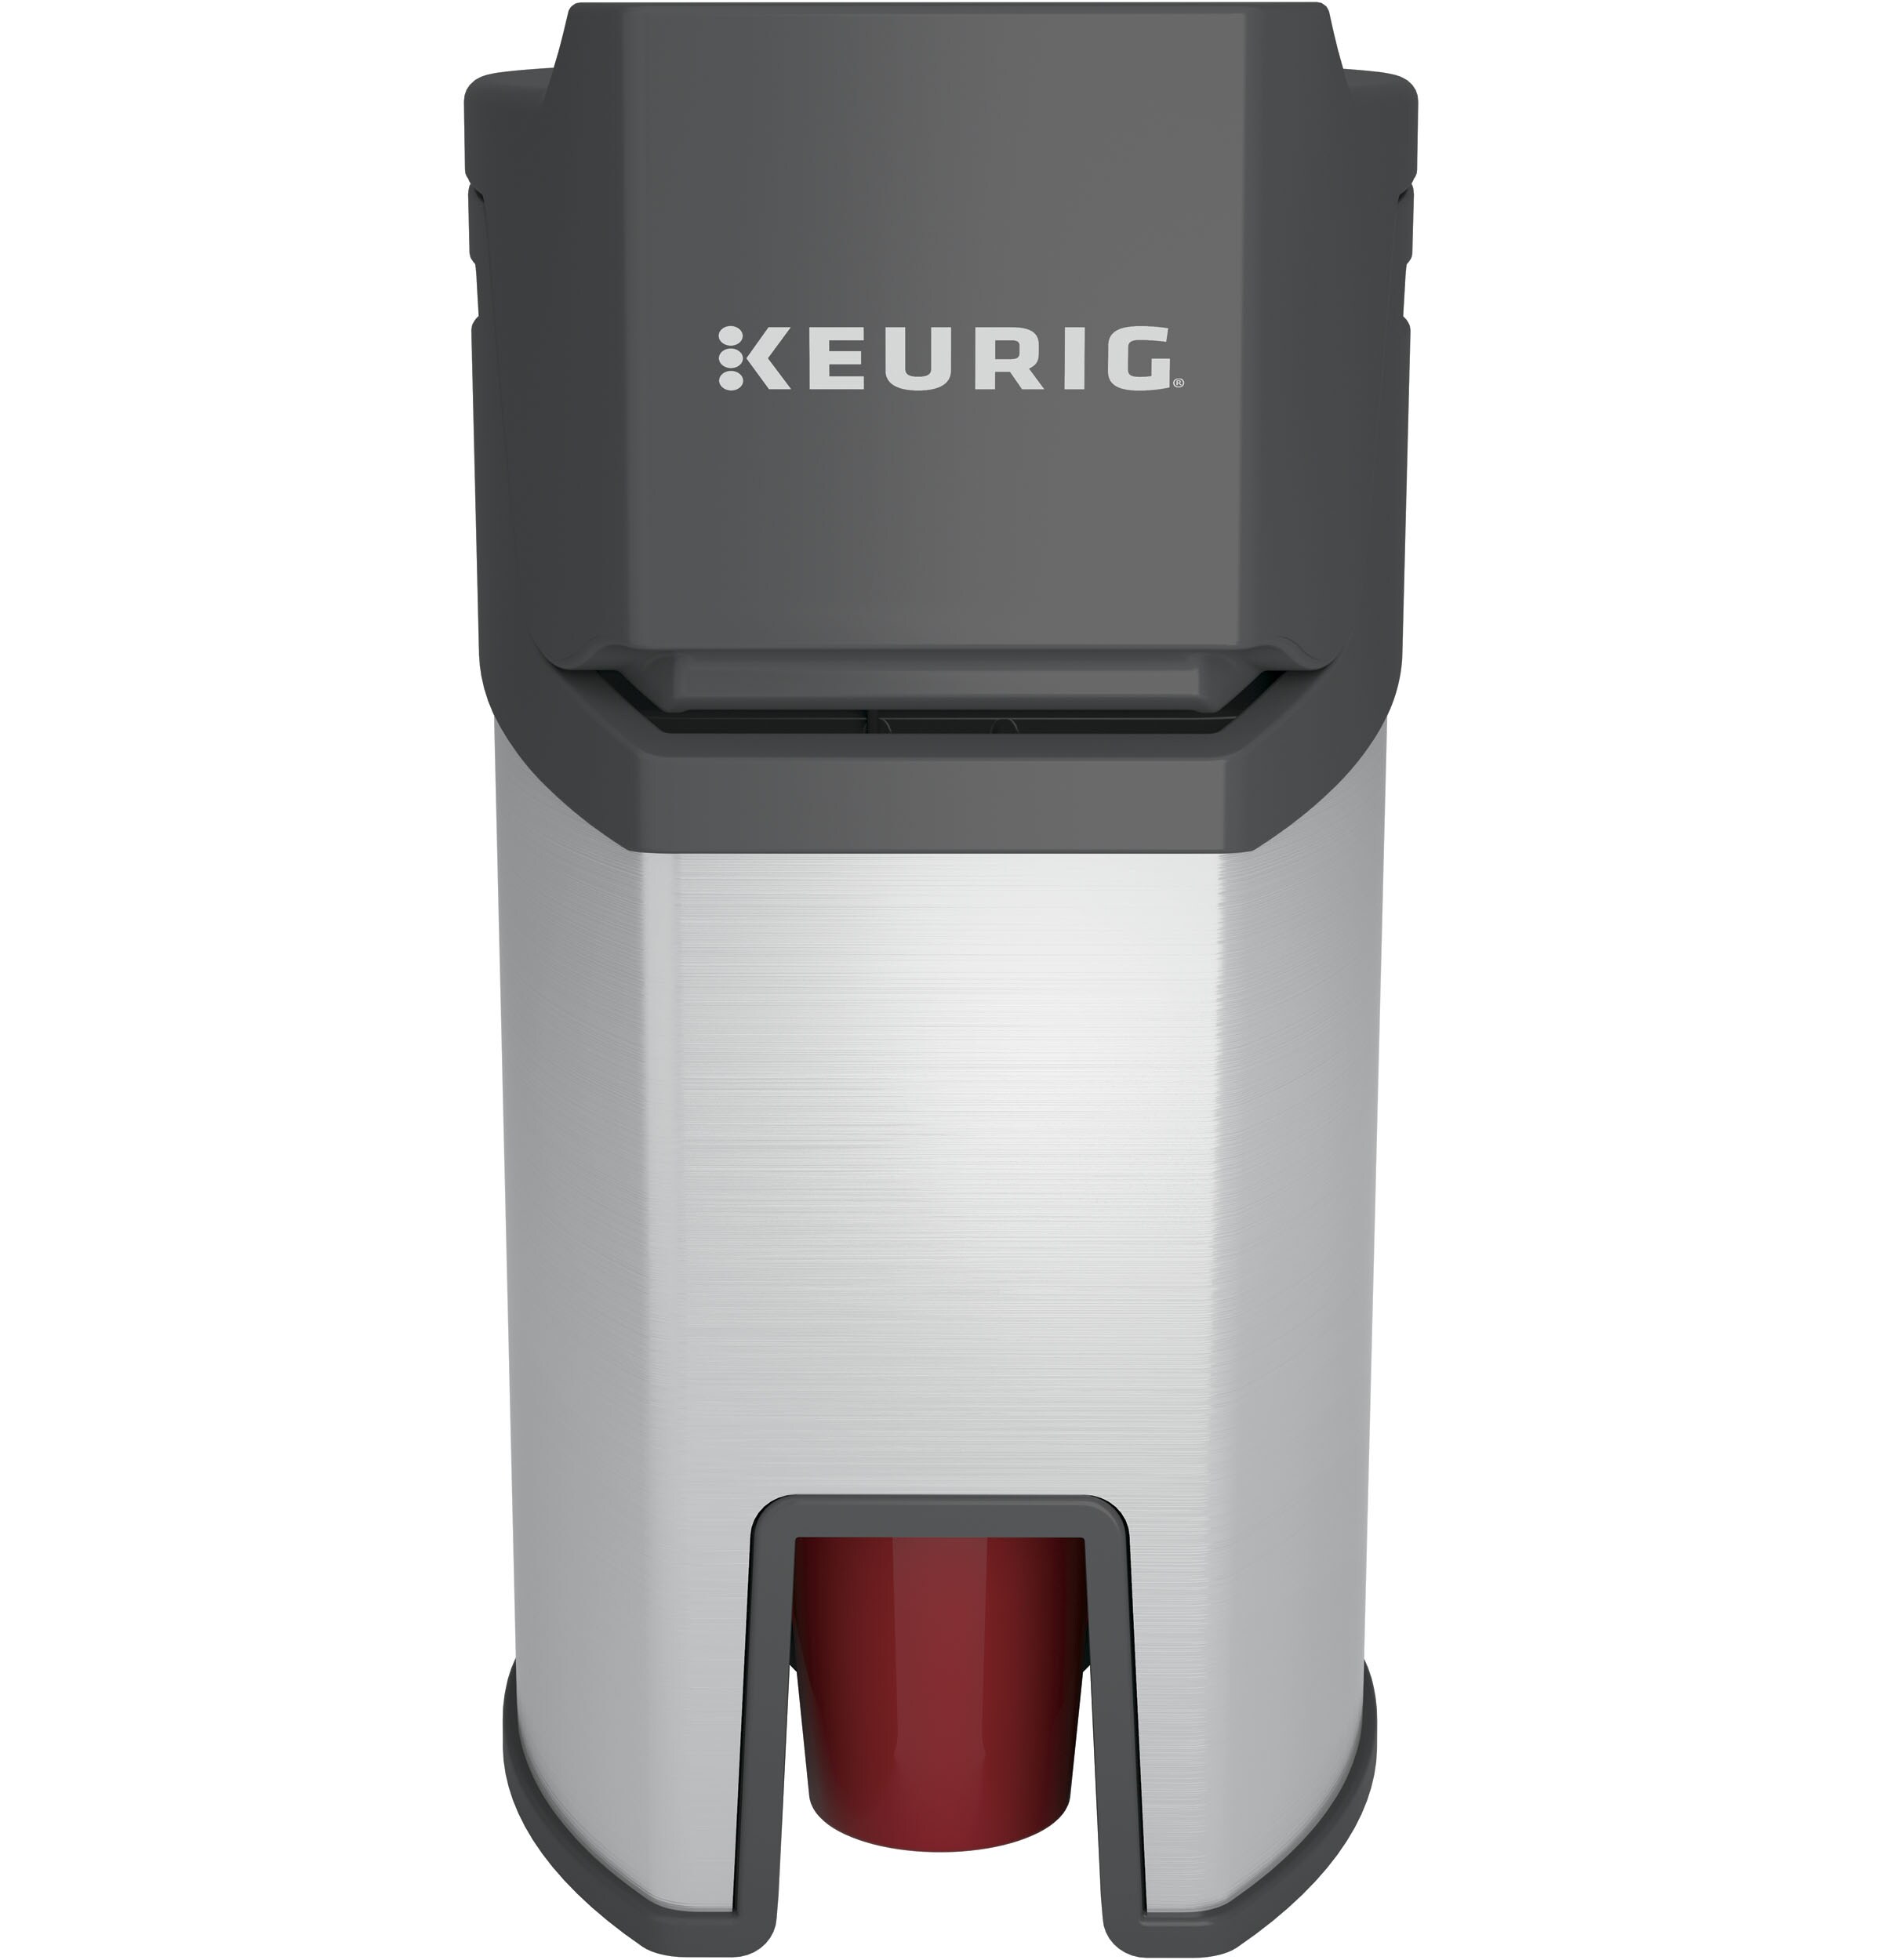 GE Café French door refrigerator with Keurig® K-Cup® single cup brewer